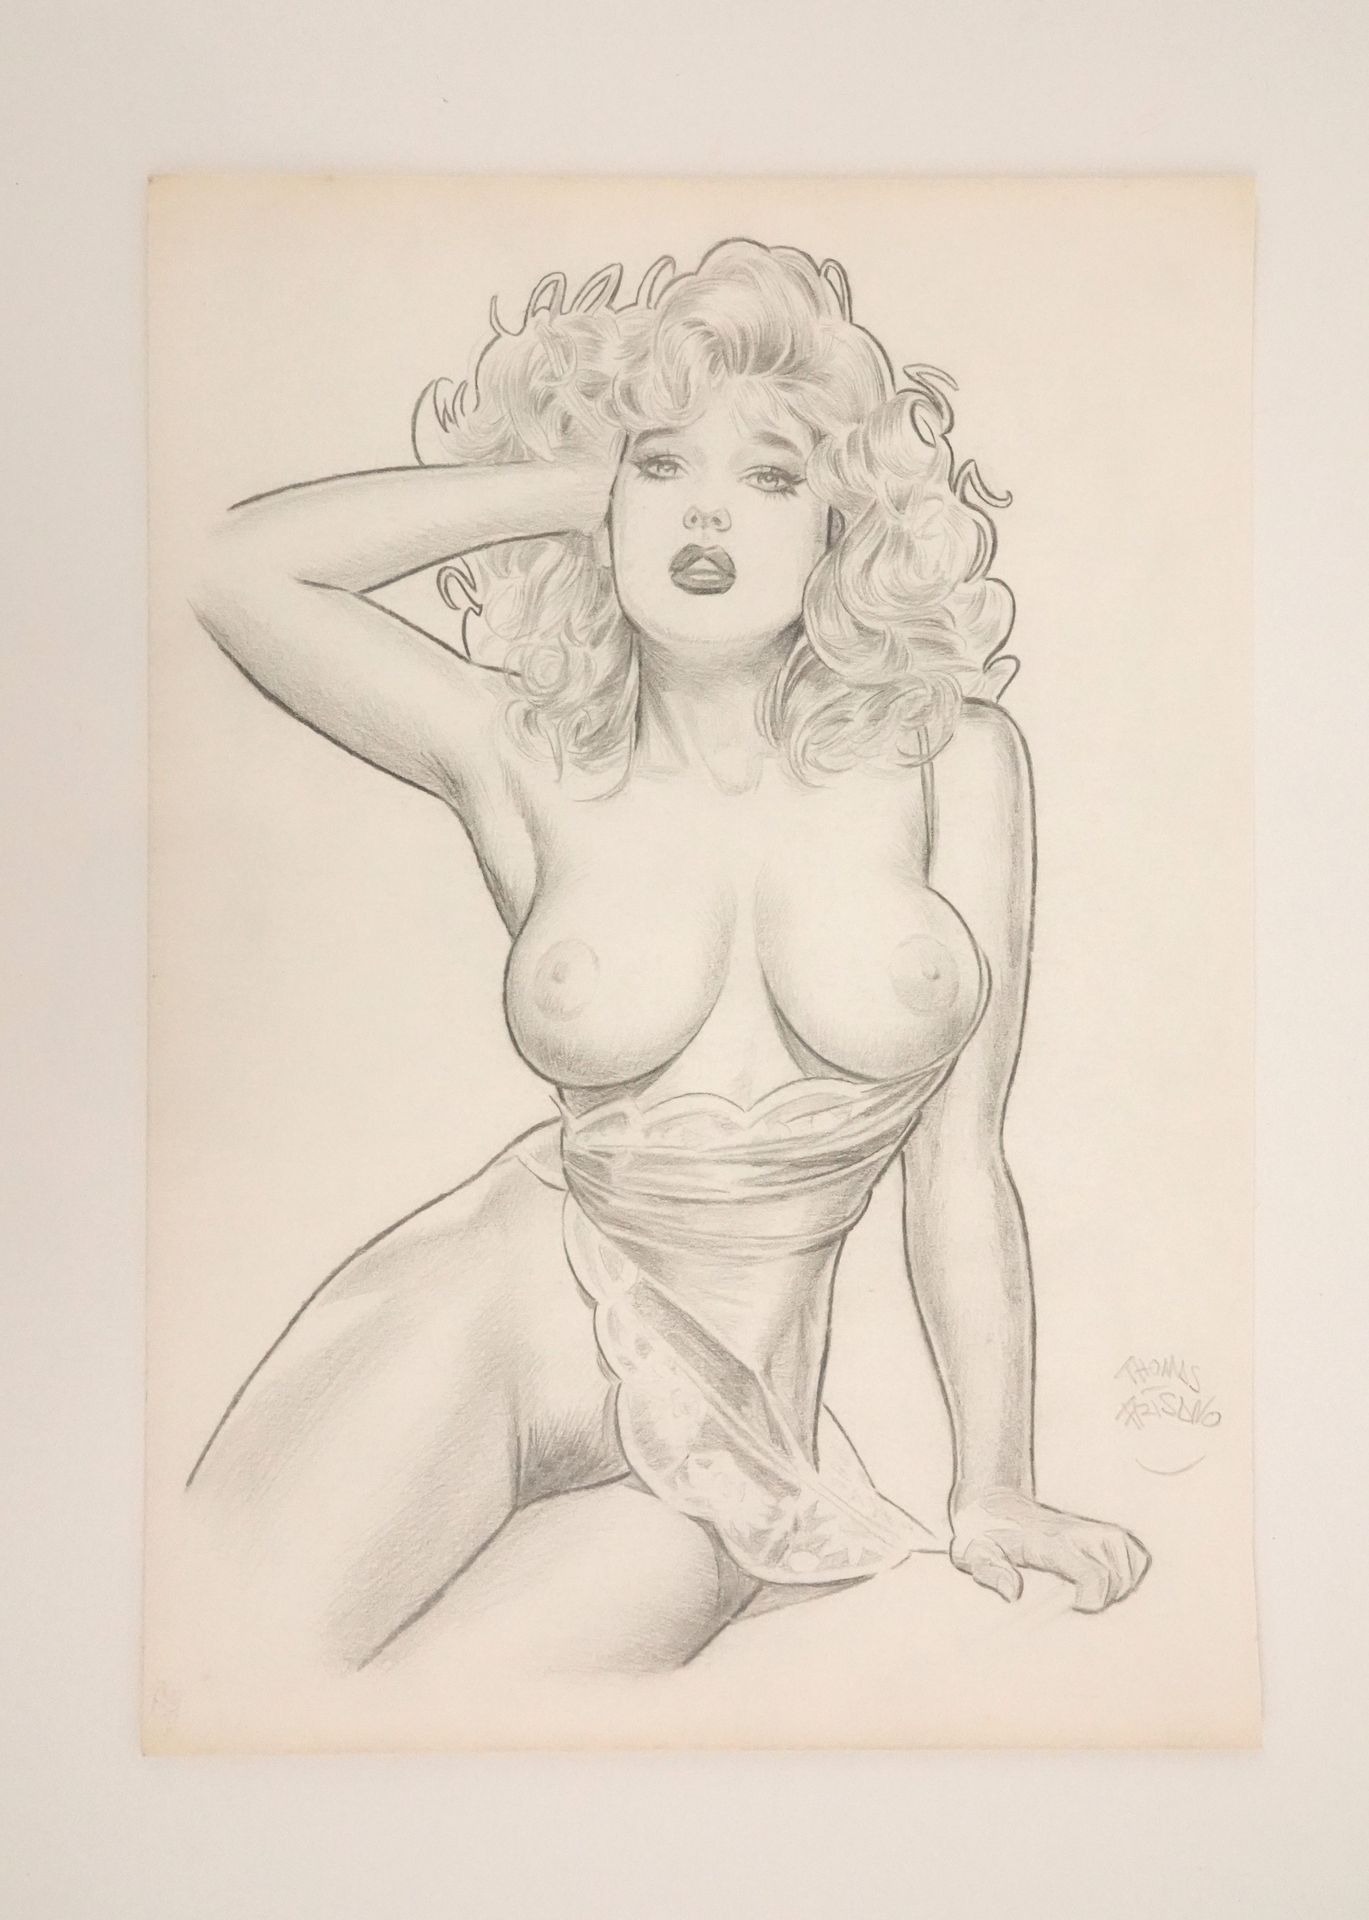 Null 弗里萨诺-托马斯
表现一个年轻裸体女人的插图
石墨画，右下角有签名
29 x 21 cm